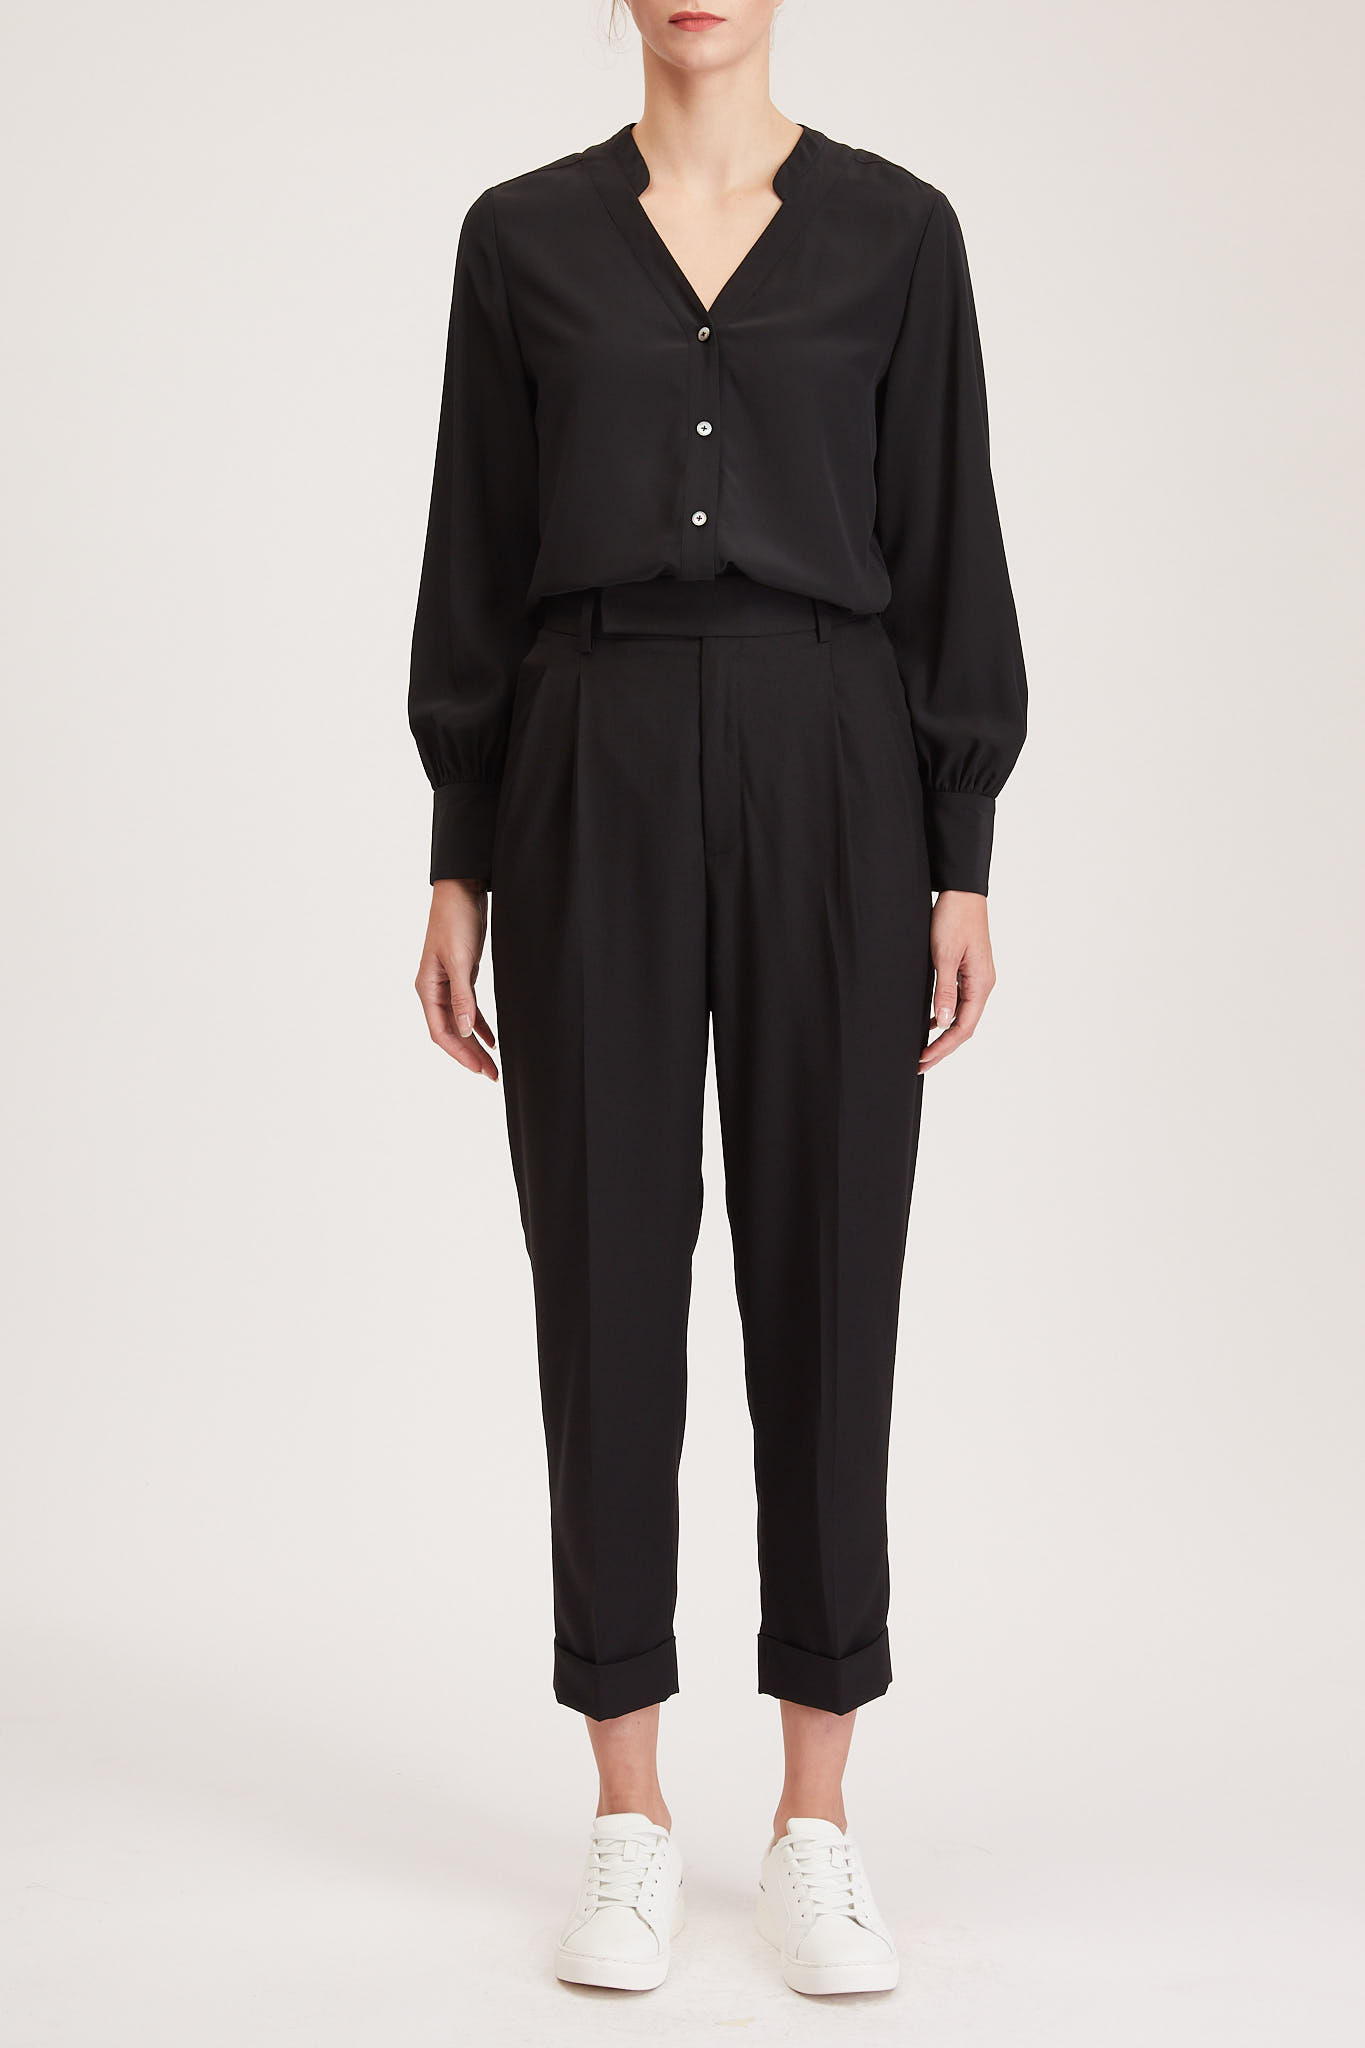 Canterbury Blouse – Silk V-neck blouse in black silk crepe de chine